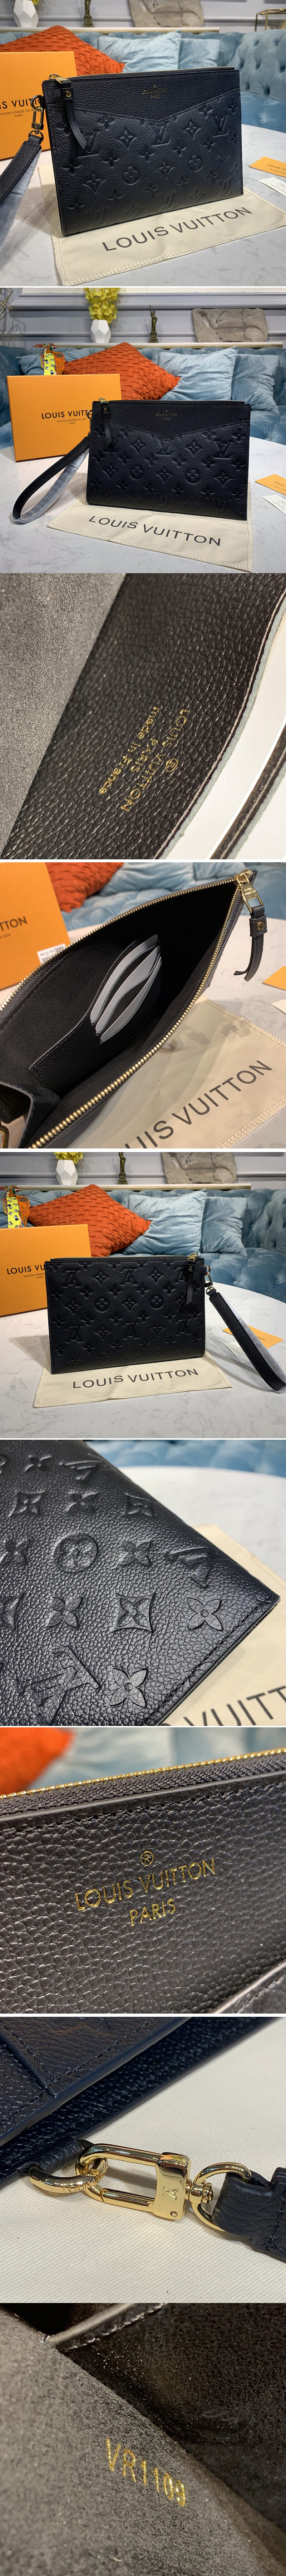 Replica Louis Vuitton M68705 LV Pochette Melanie MM Bag in Black Monogram Empreinte leather